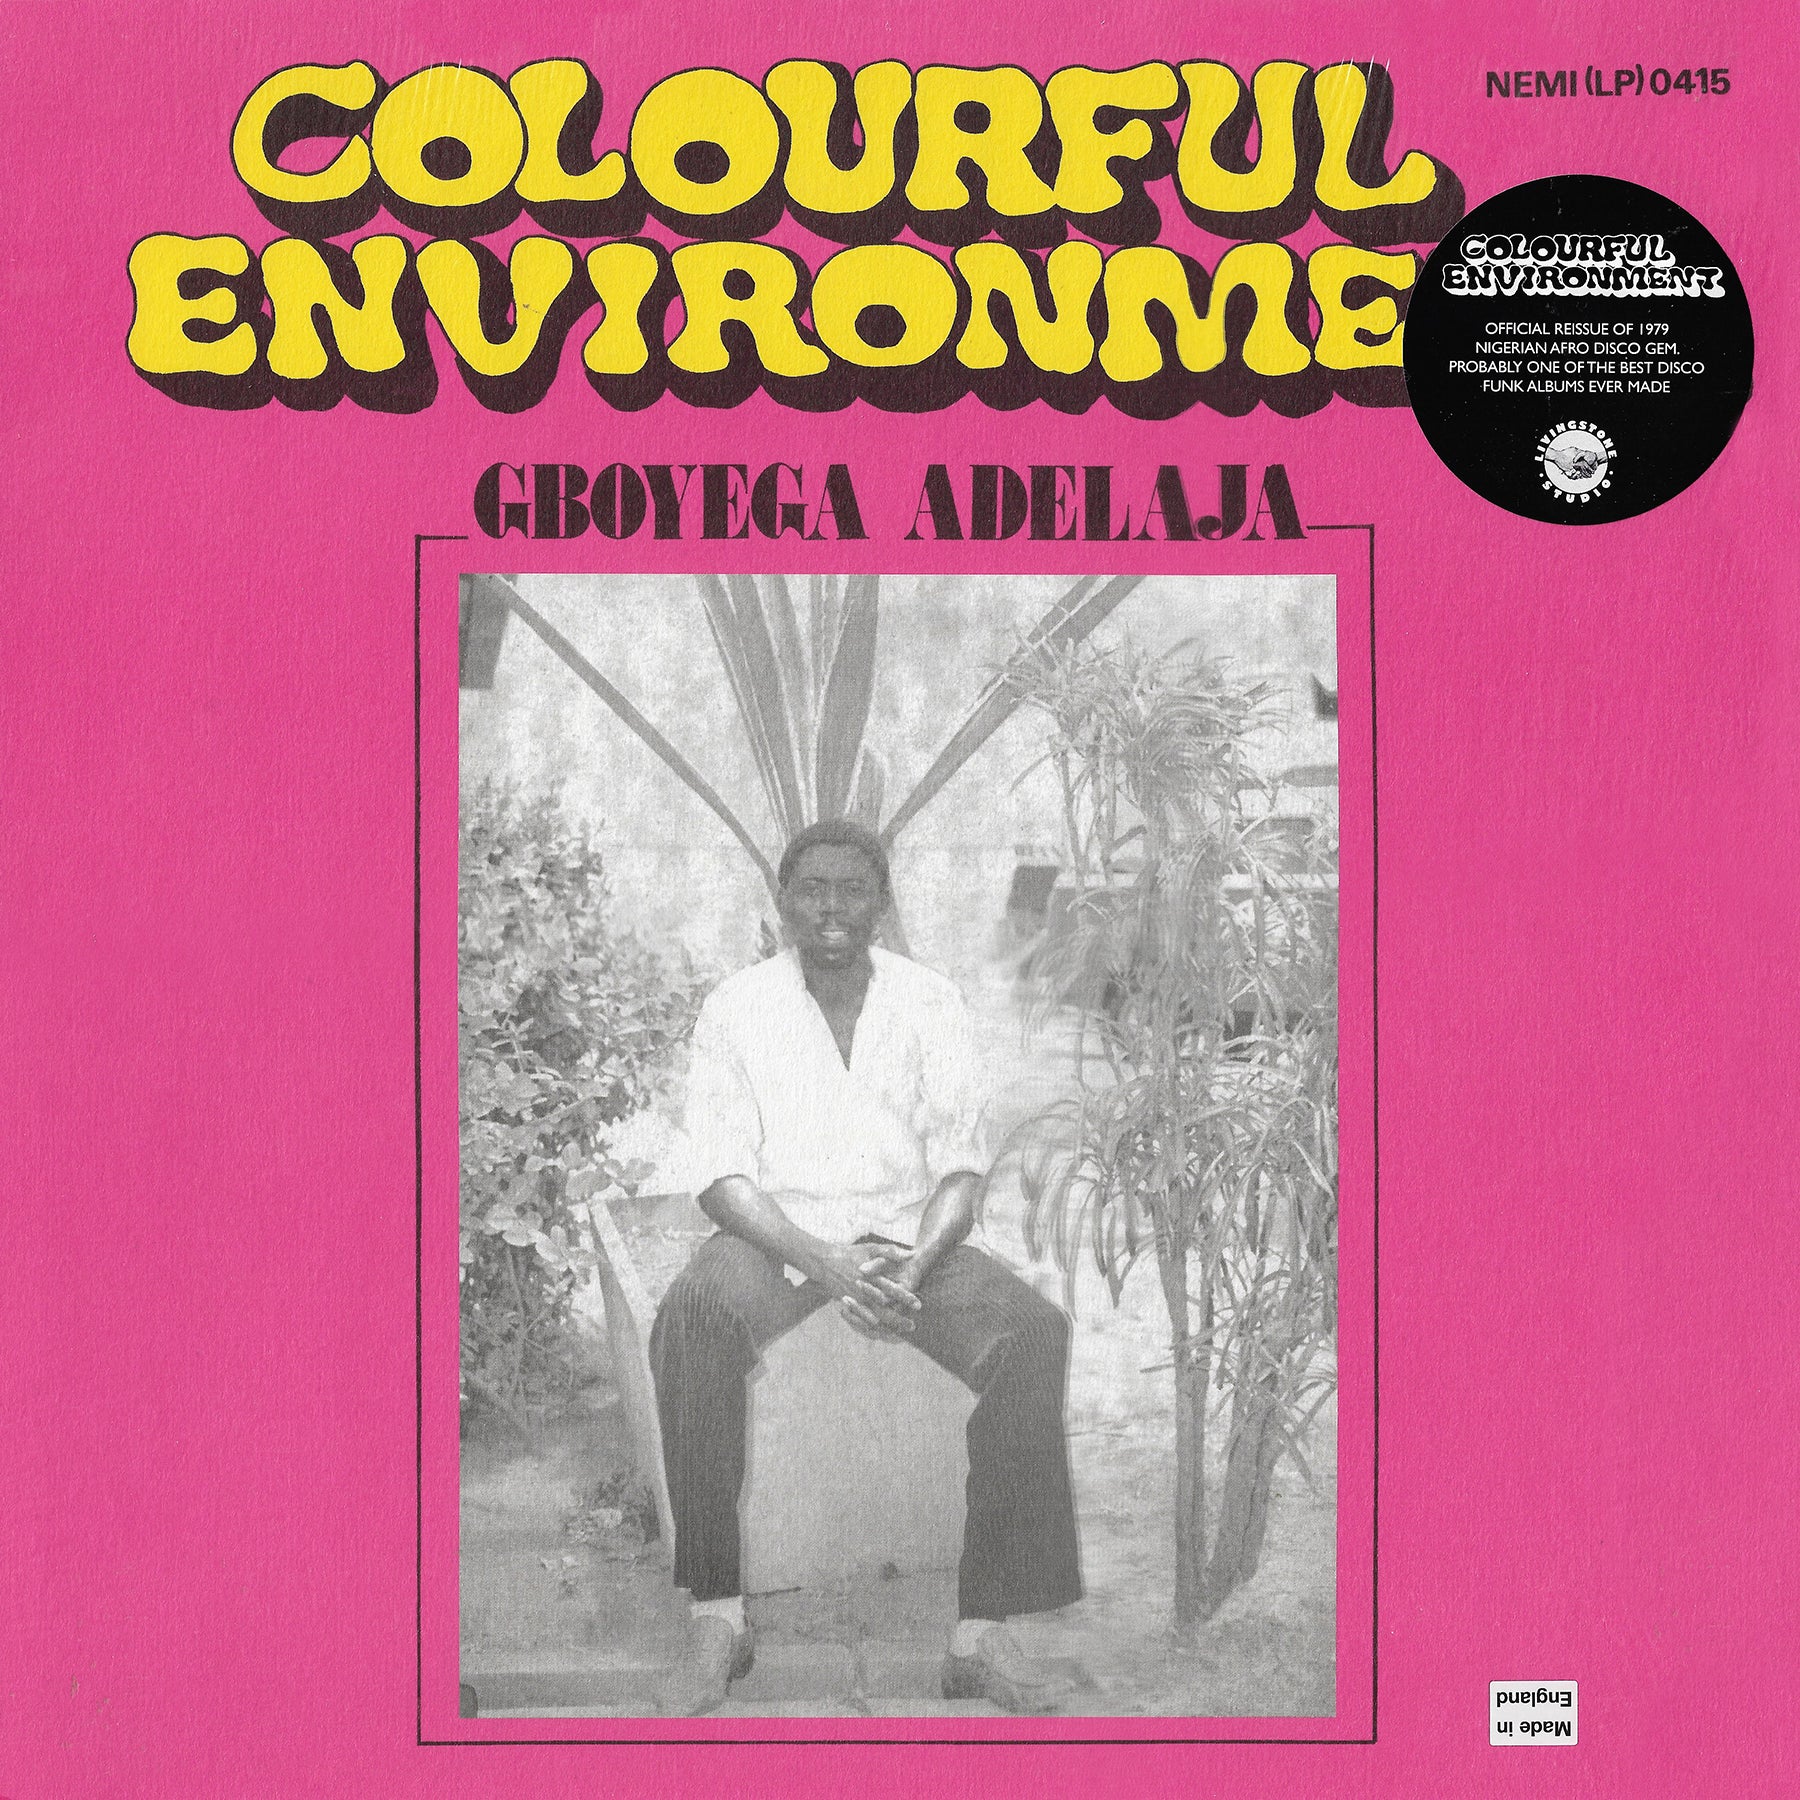 Gboyega Adelaja - Colourful Environment